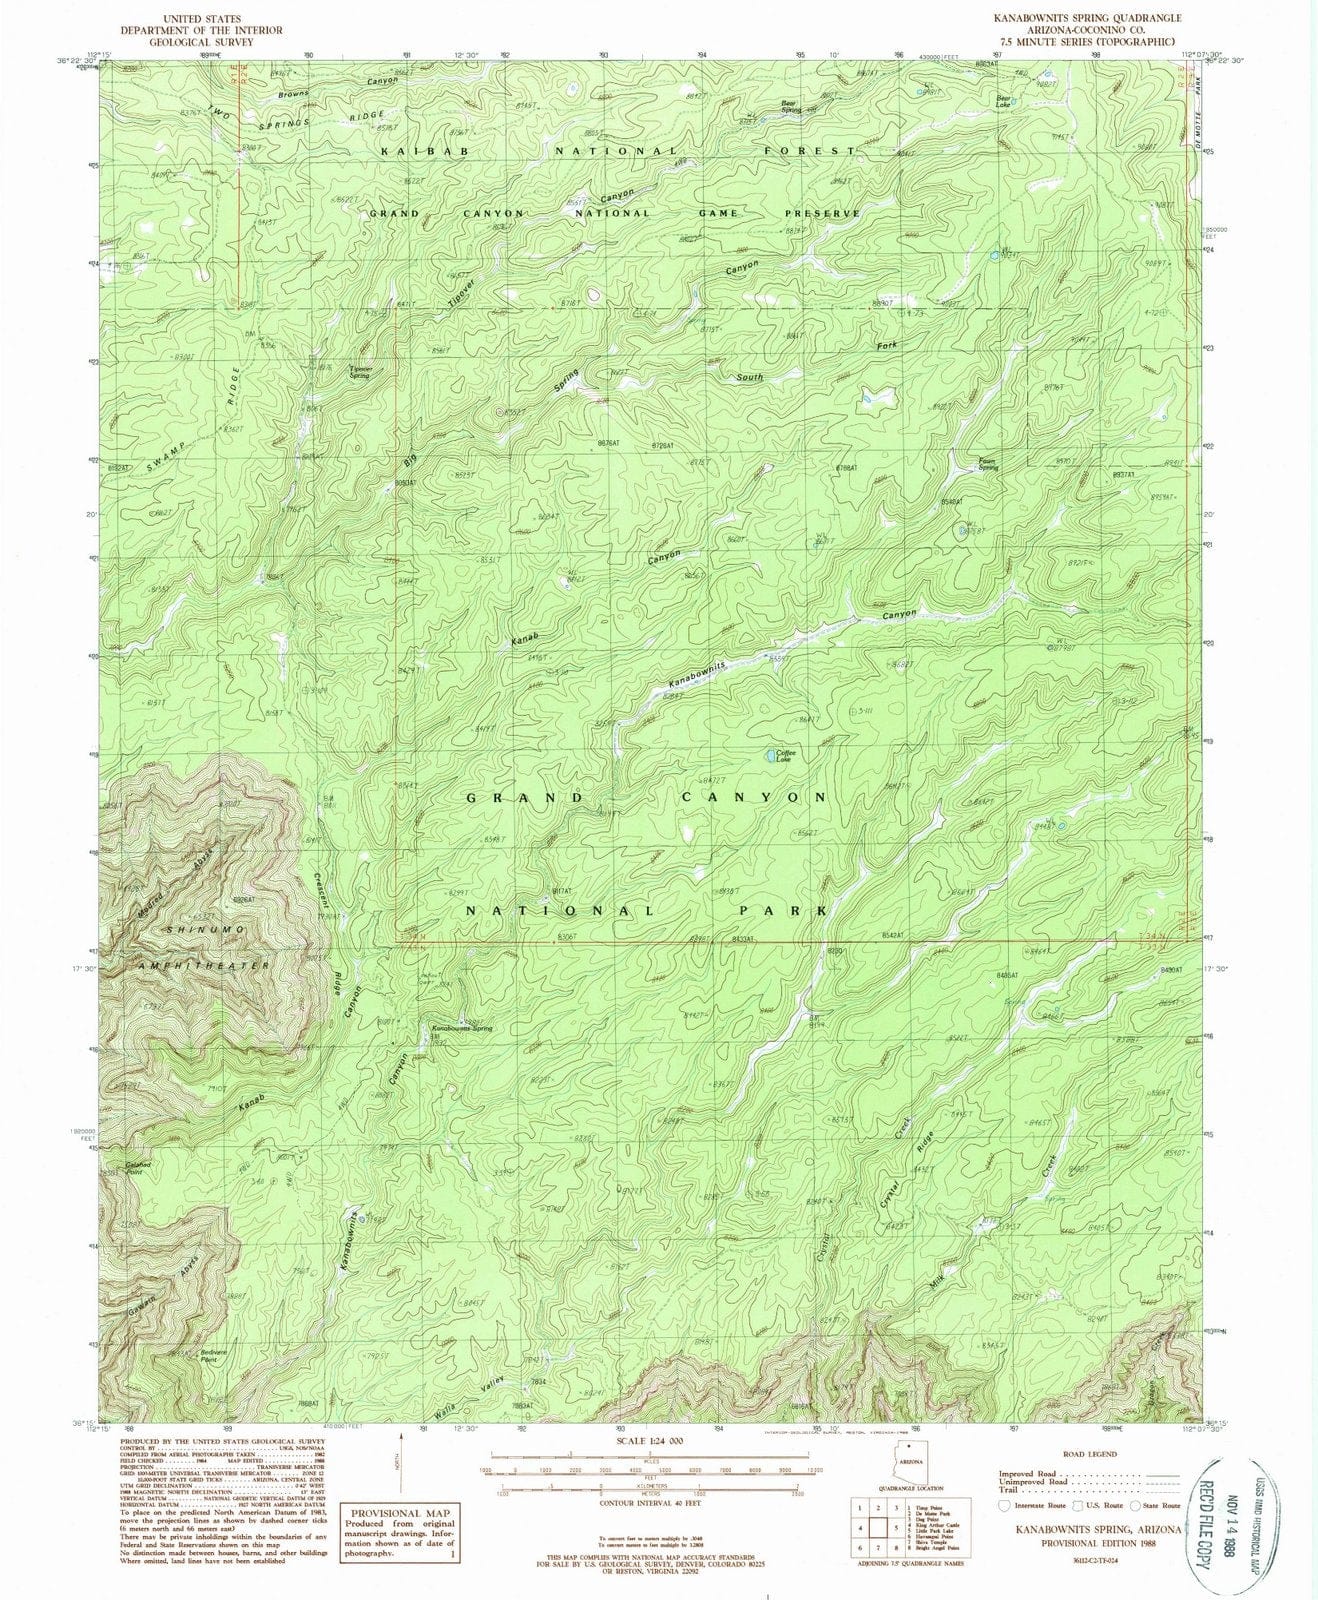 1988 Kanabownits Spring, AZ - Arizona - USGS Topographic Map